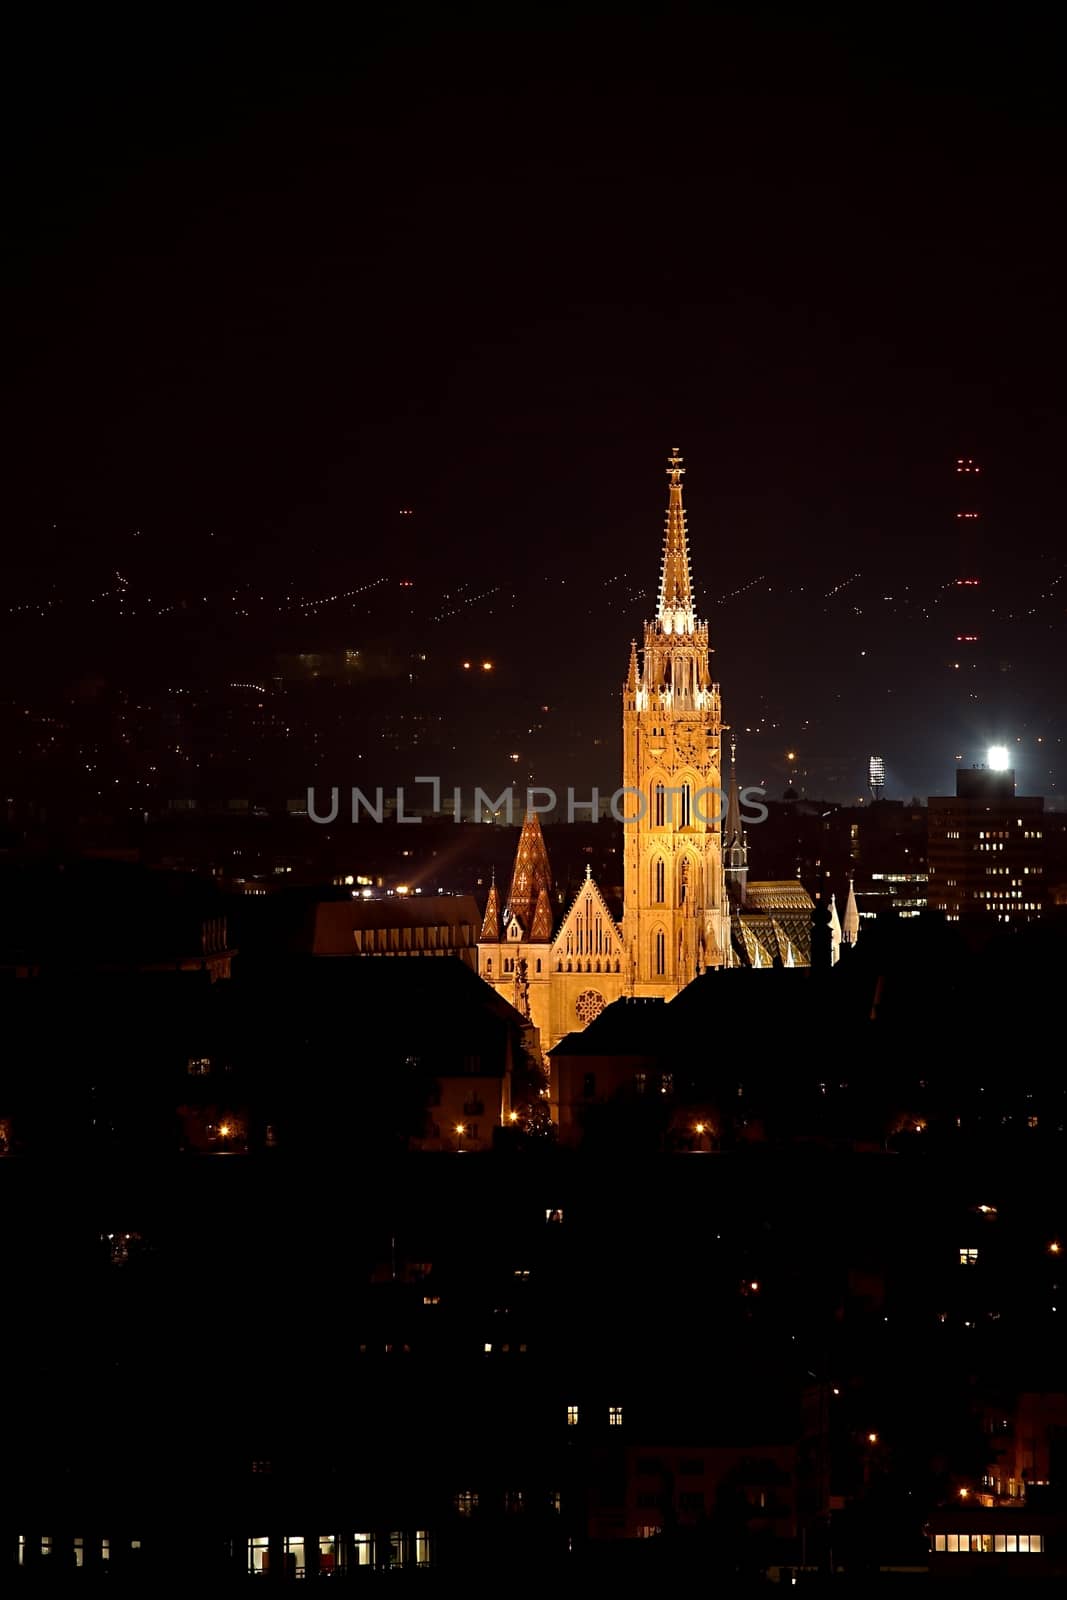 Budapest night by Gudella